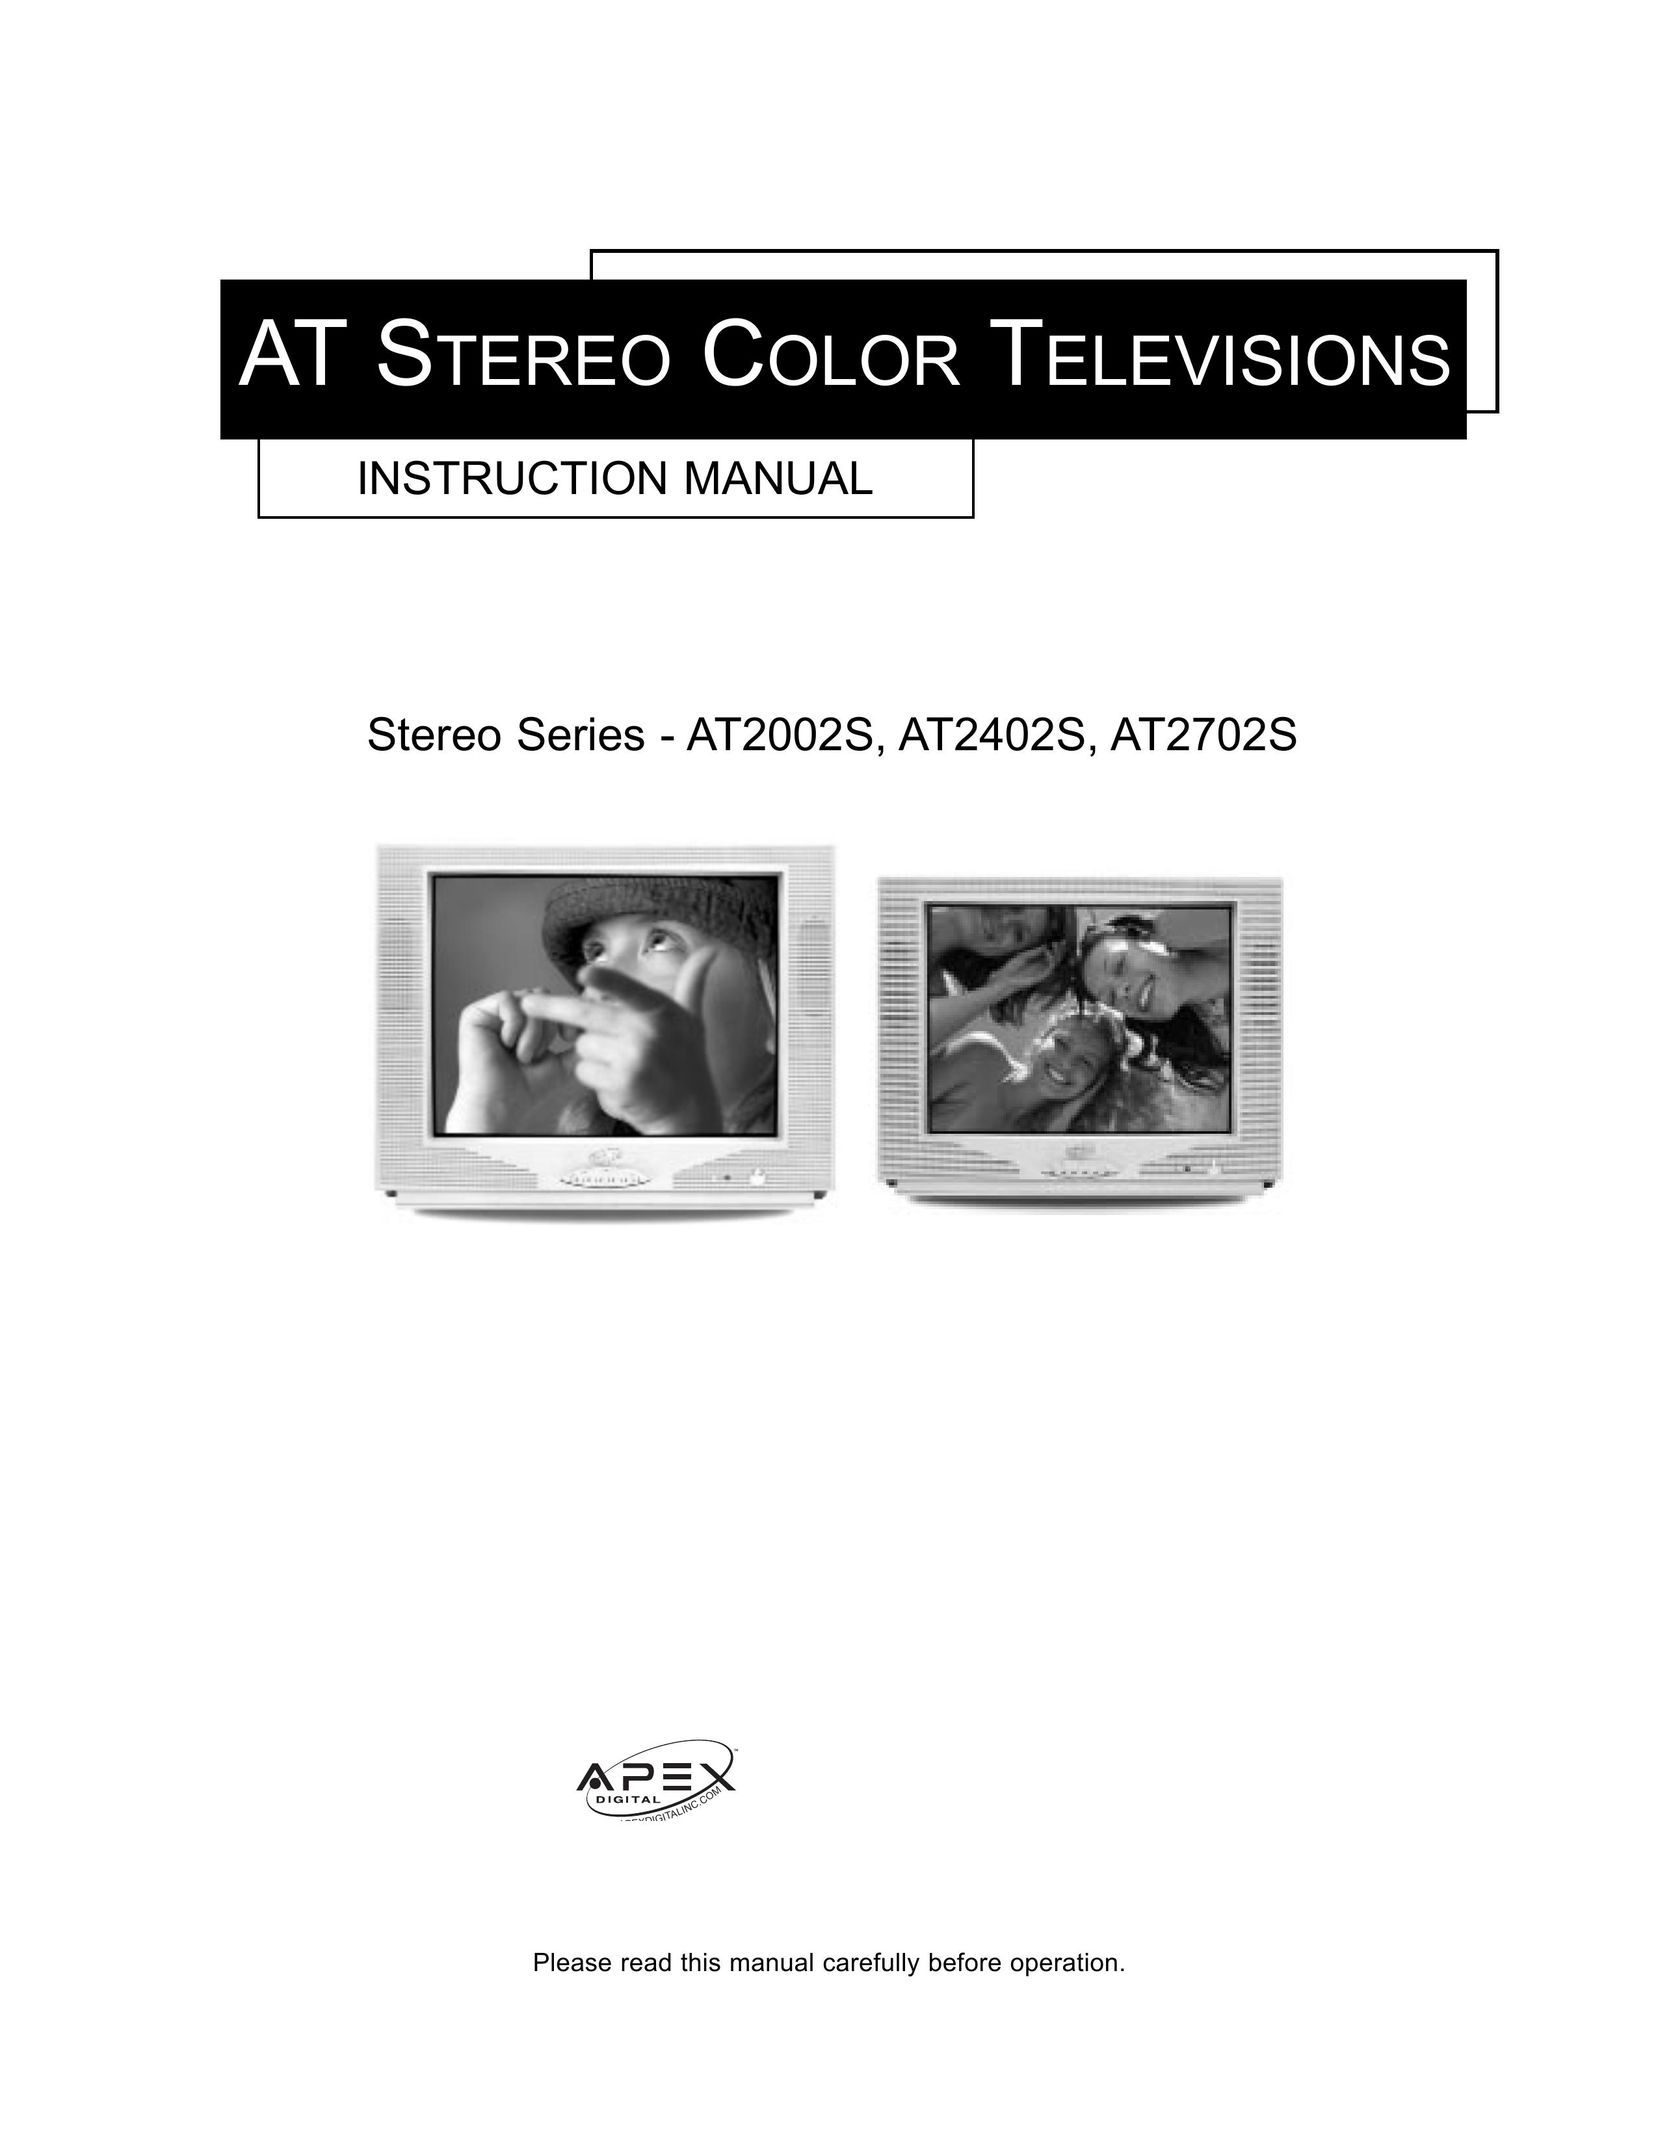 Apex Digital AT2002S Flat Panel Television User Manual (Page 1)